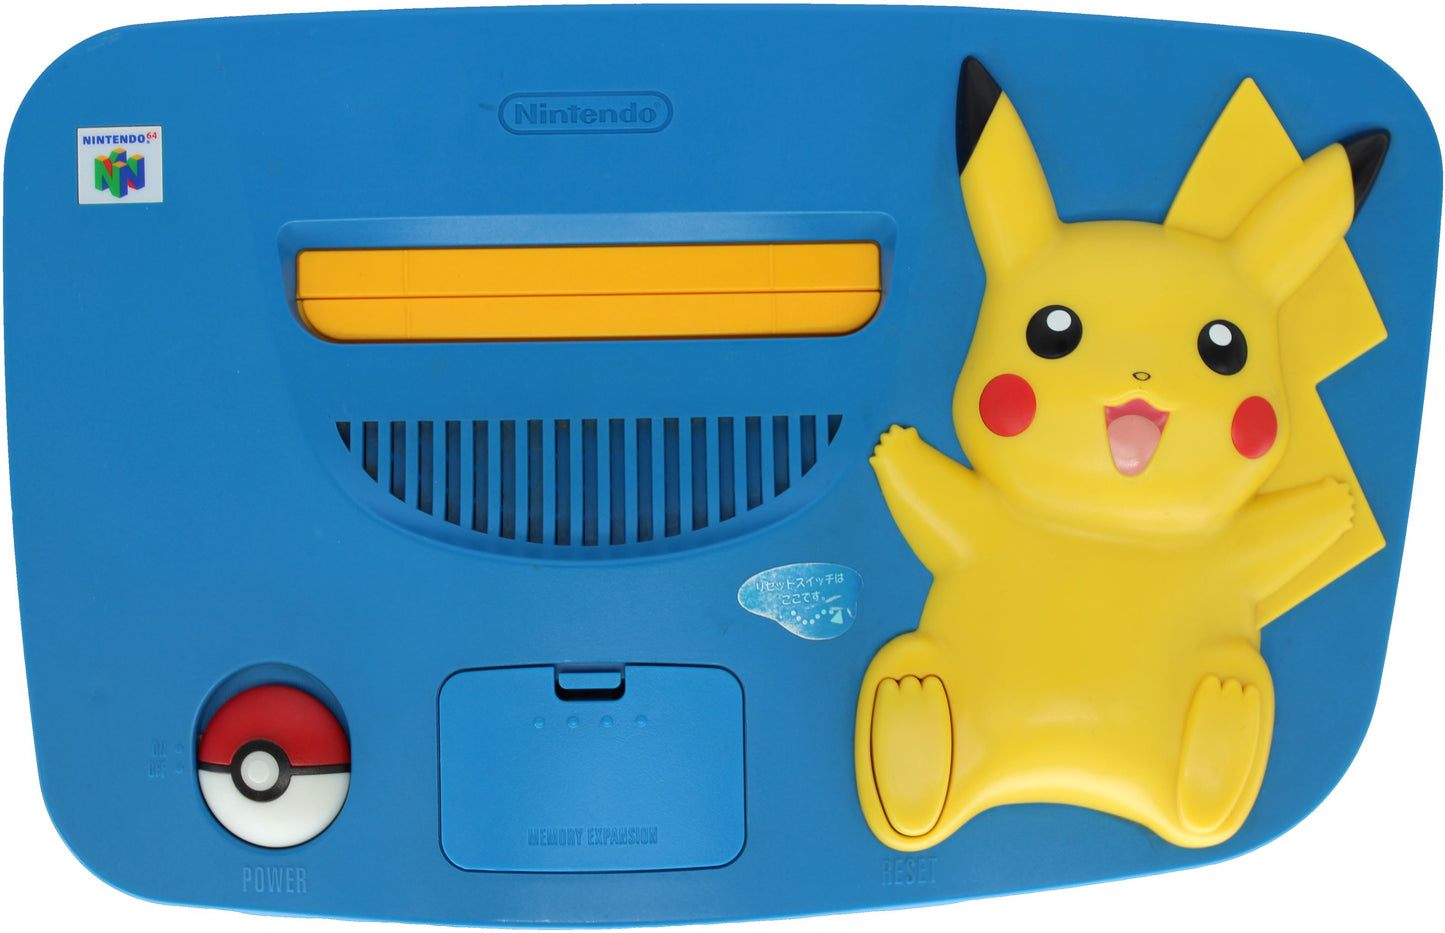 Pikachu Nintendo 64 Console (JP) Bundle [Blue]